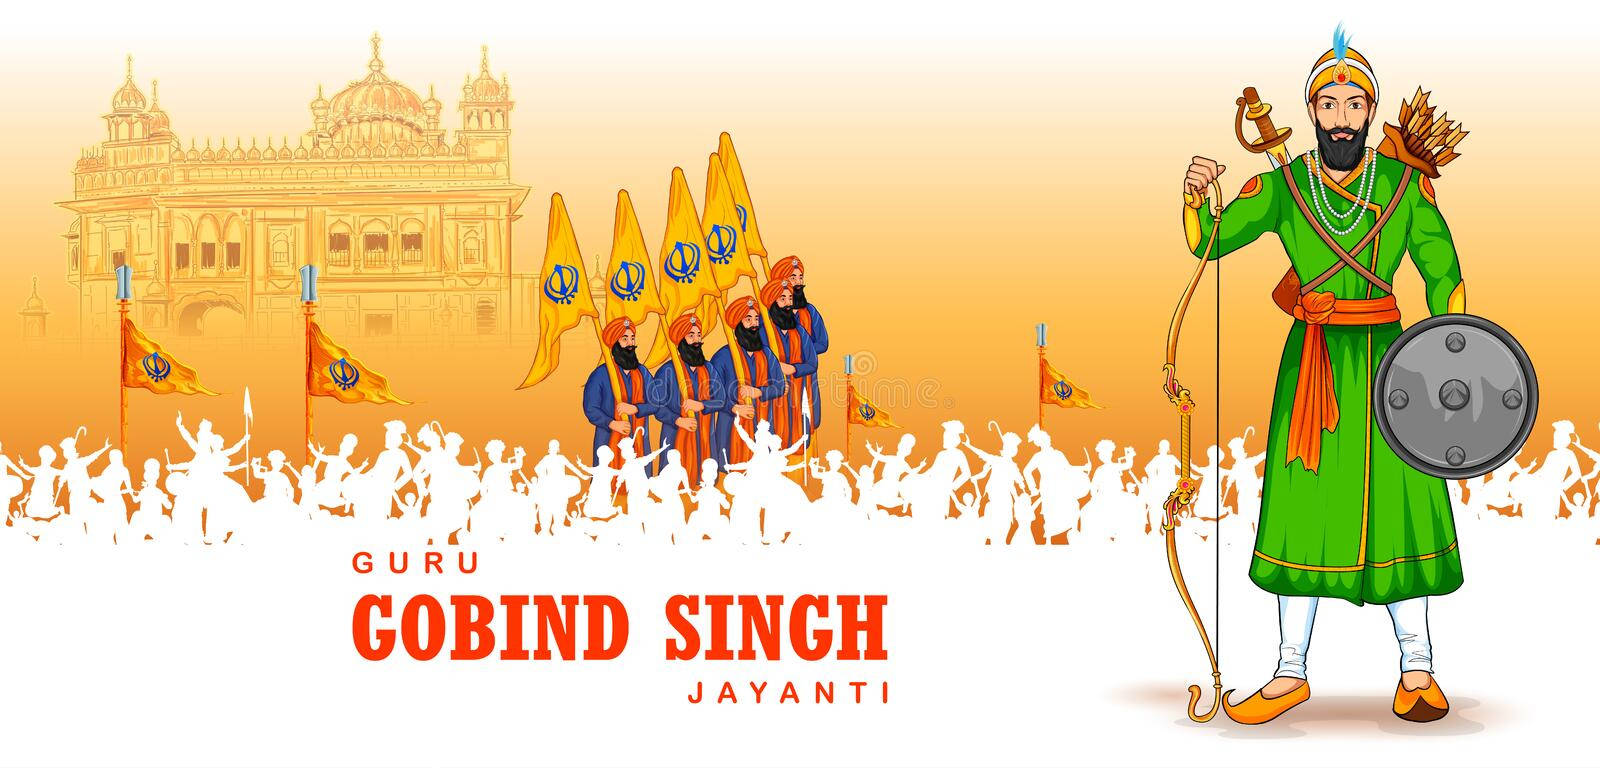 Gurugobind Singh Ji Med Soldater. Wallpaper